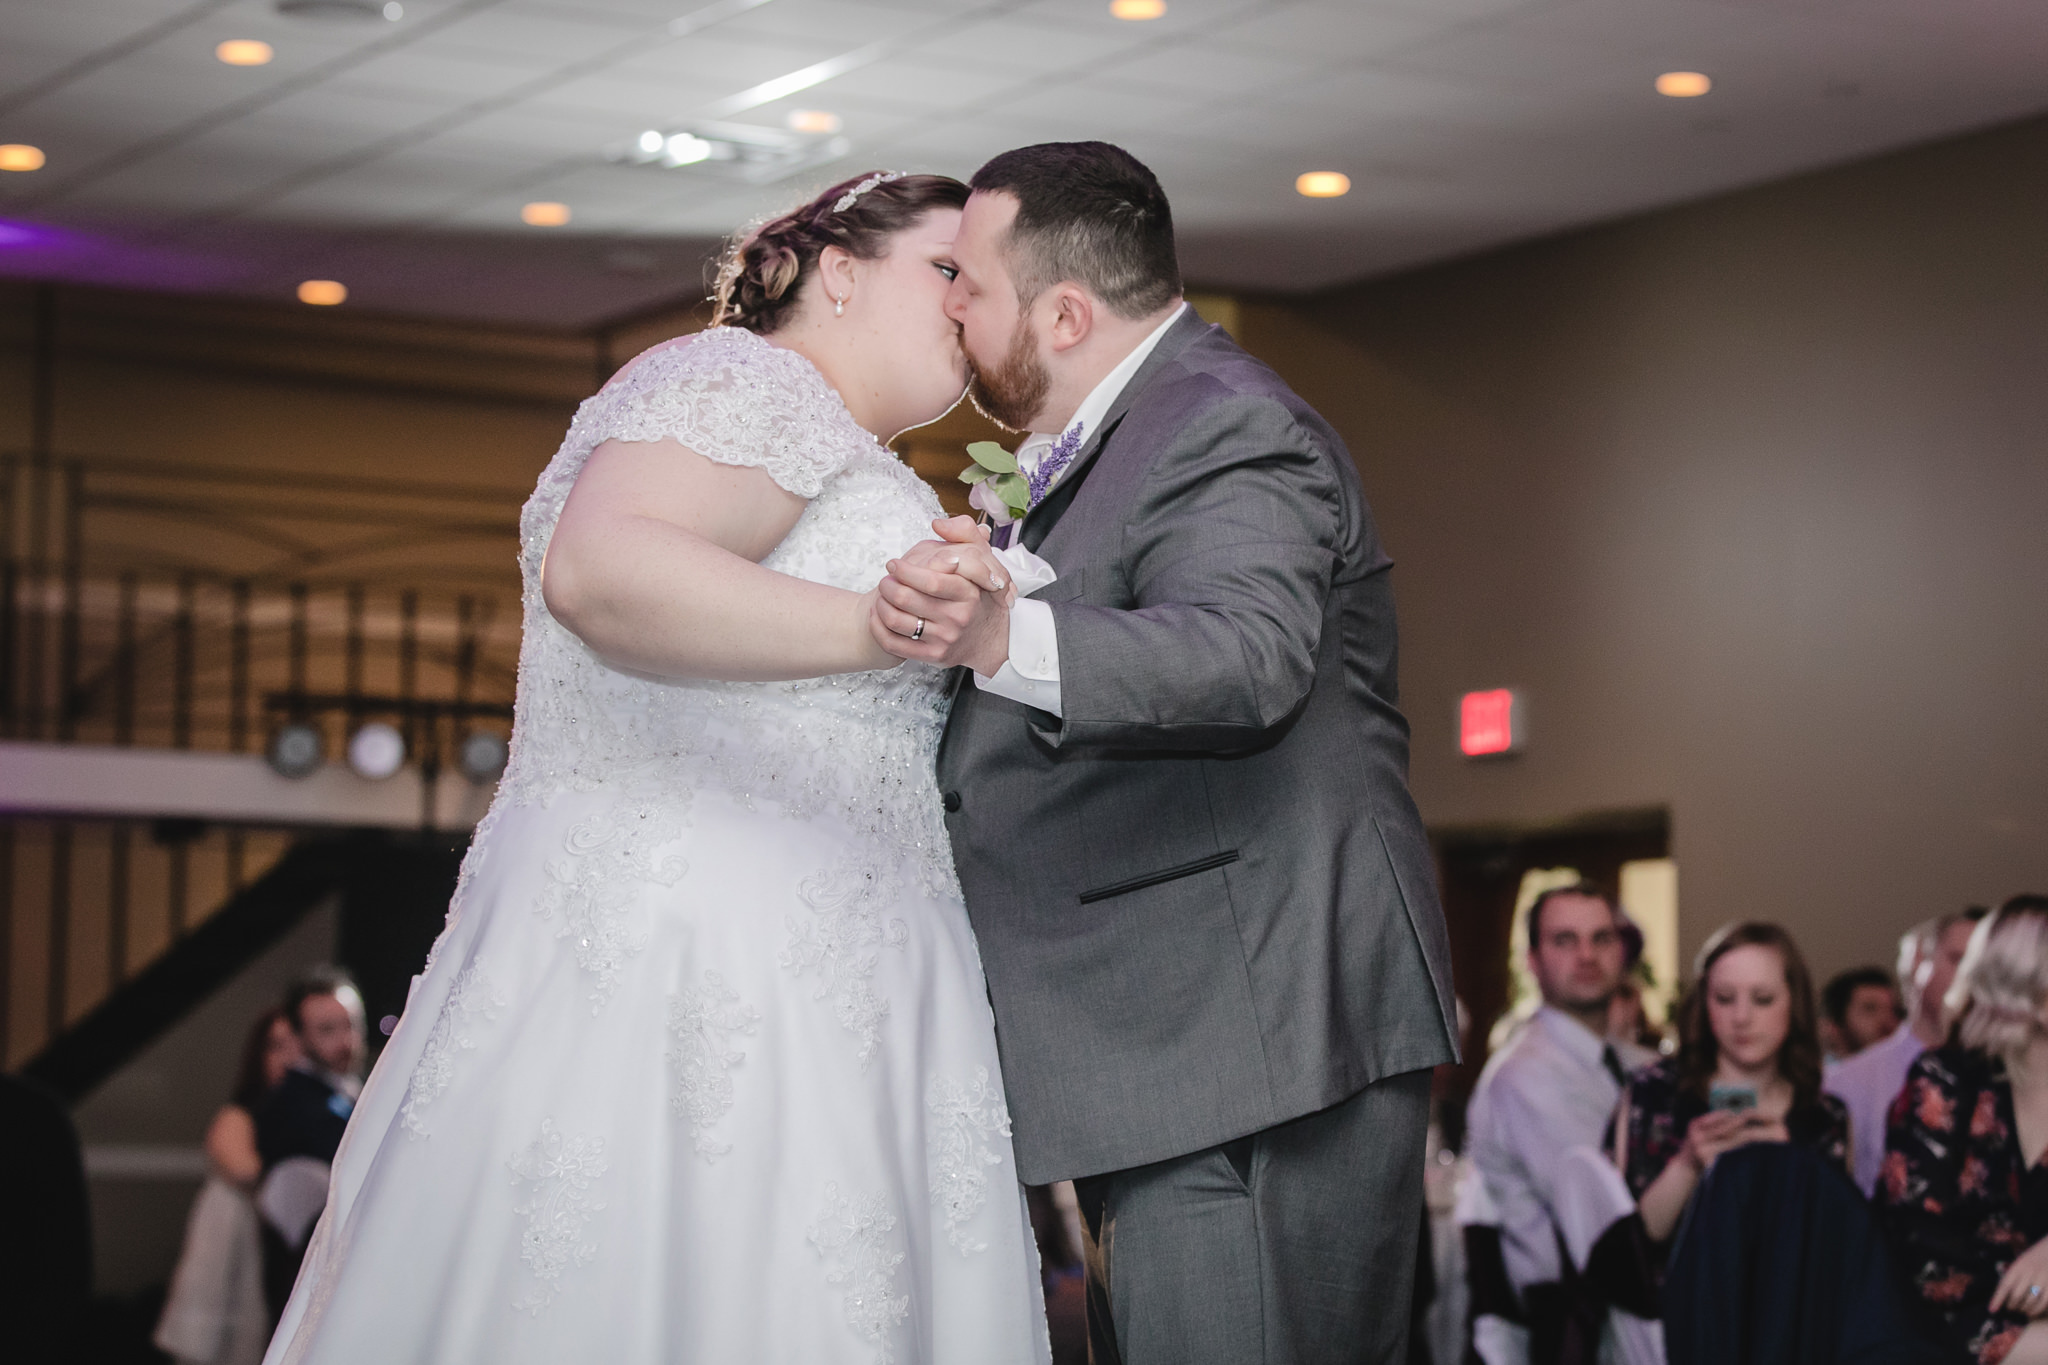 Bride & groom kiss on the dance floor at their Fez wedding reception